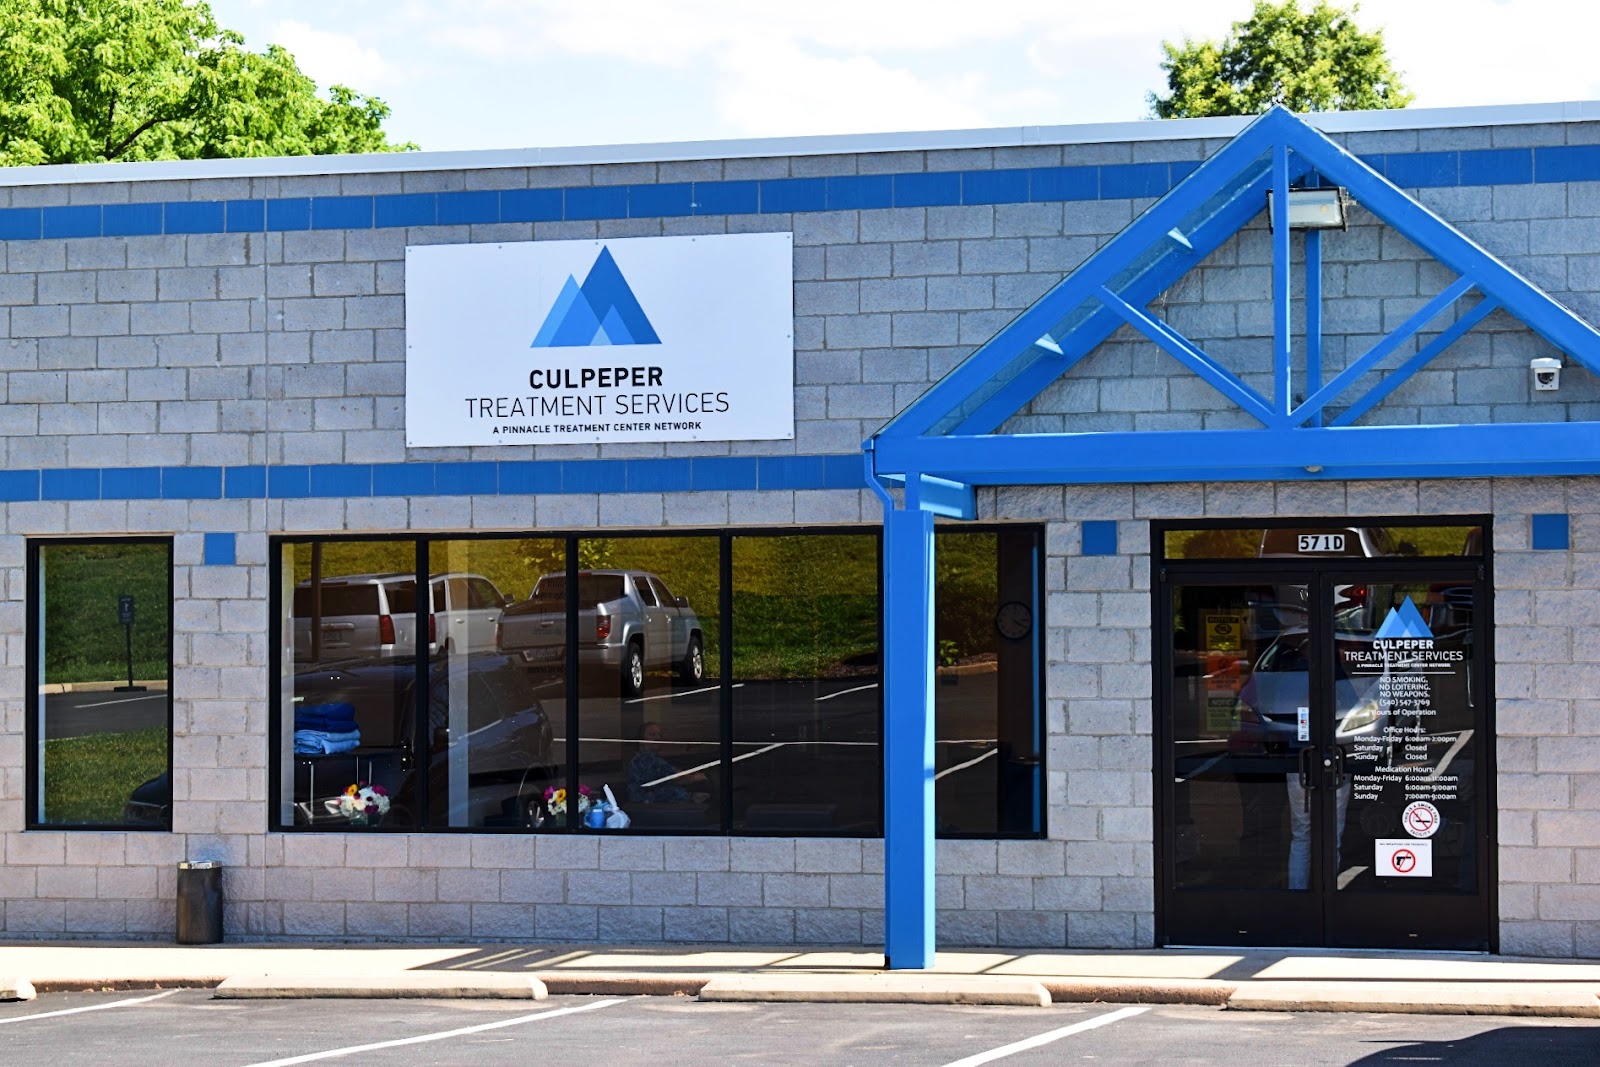 Culpeper Treatment Services